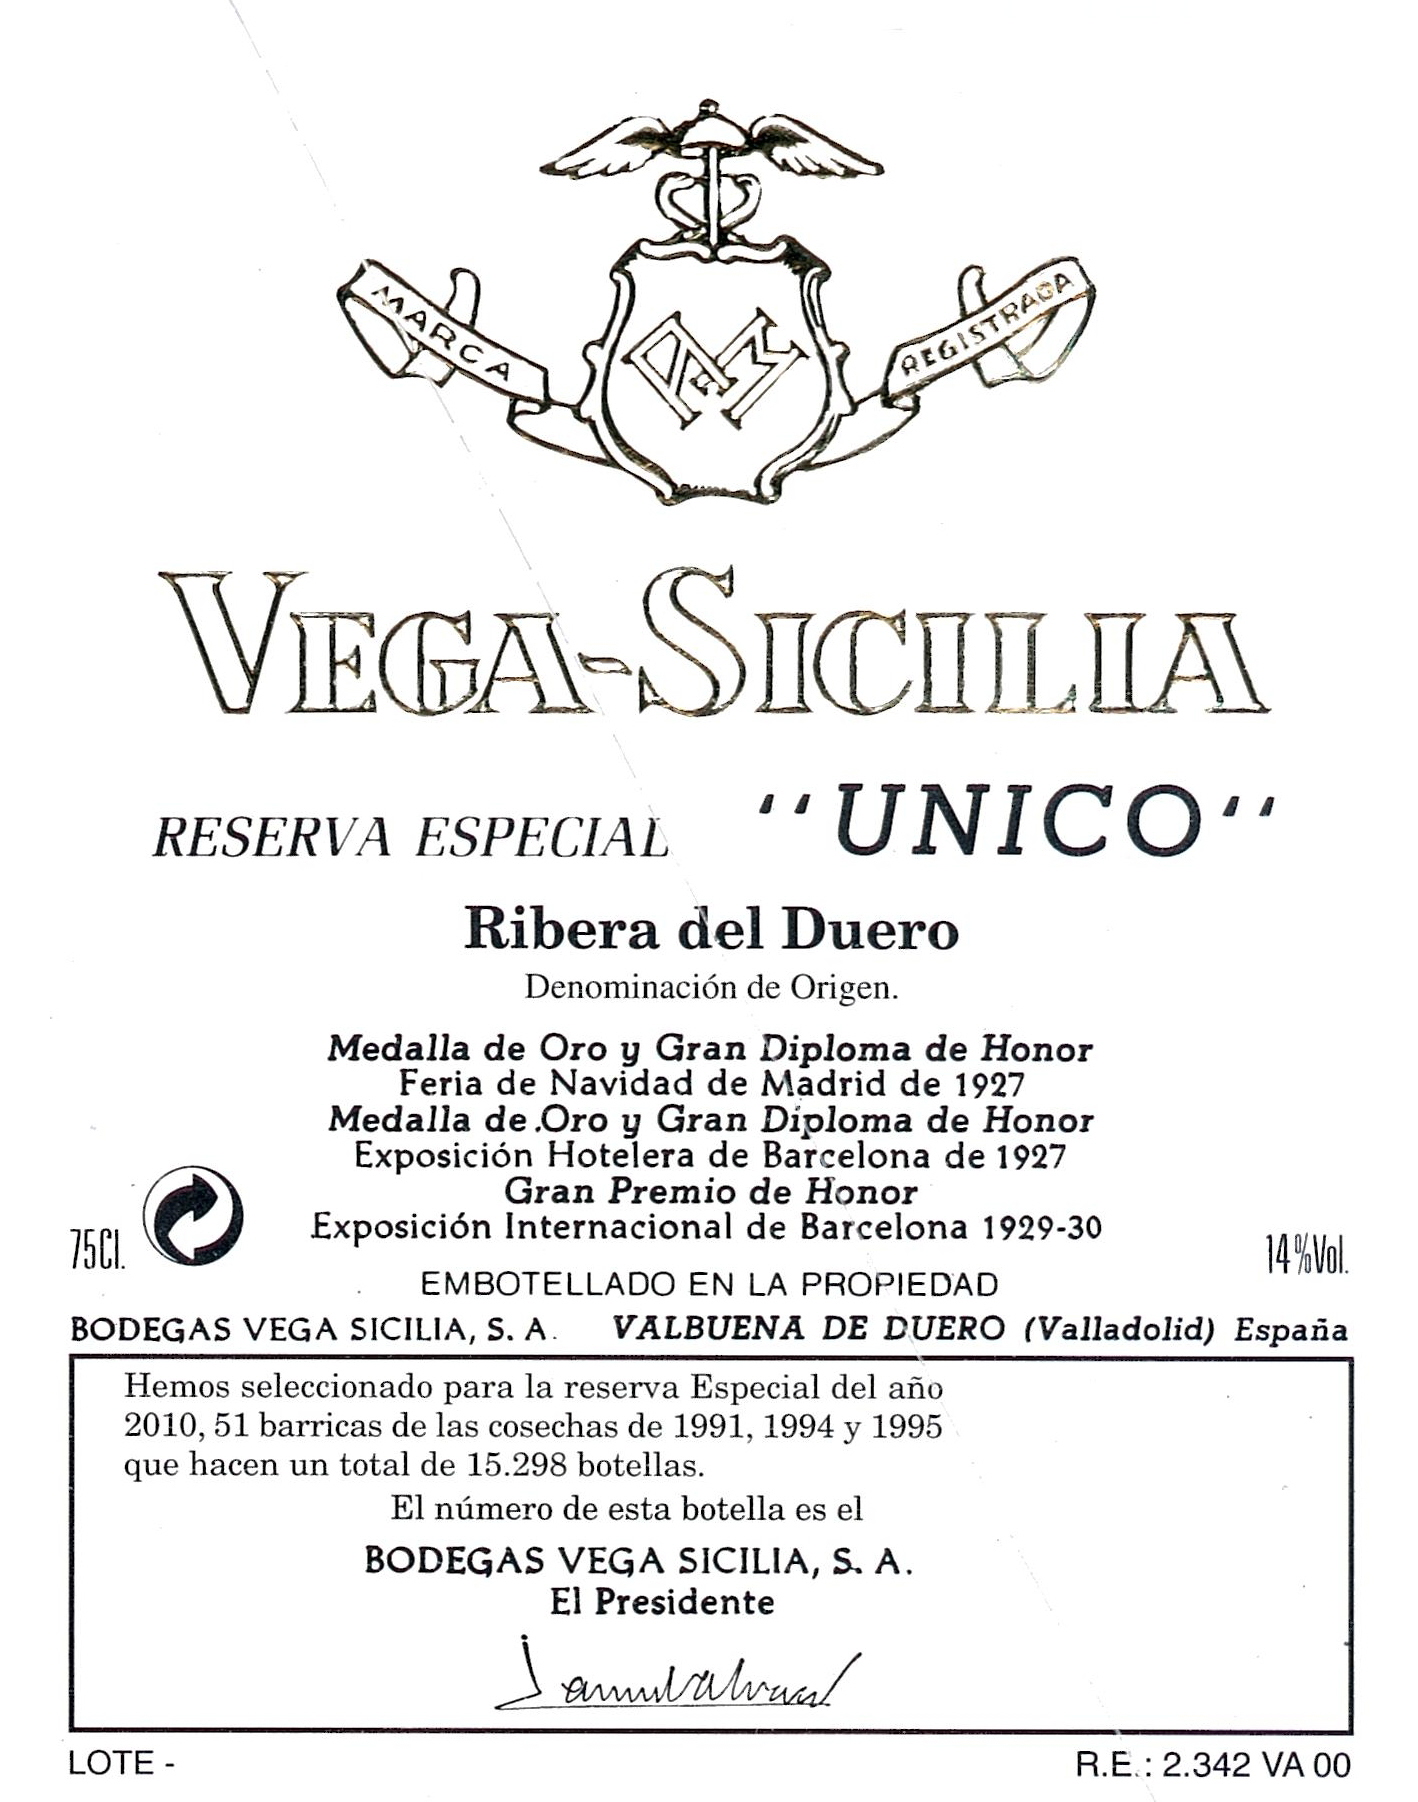 2005 Vega Sicilia Unico Ribera del Duero image